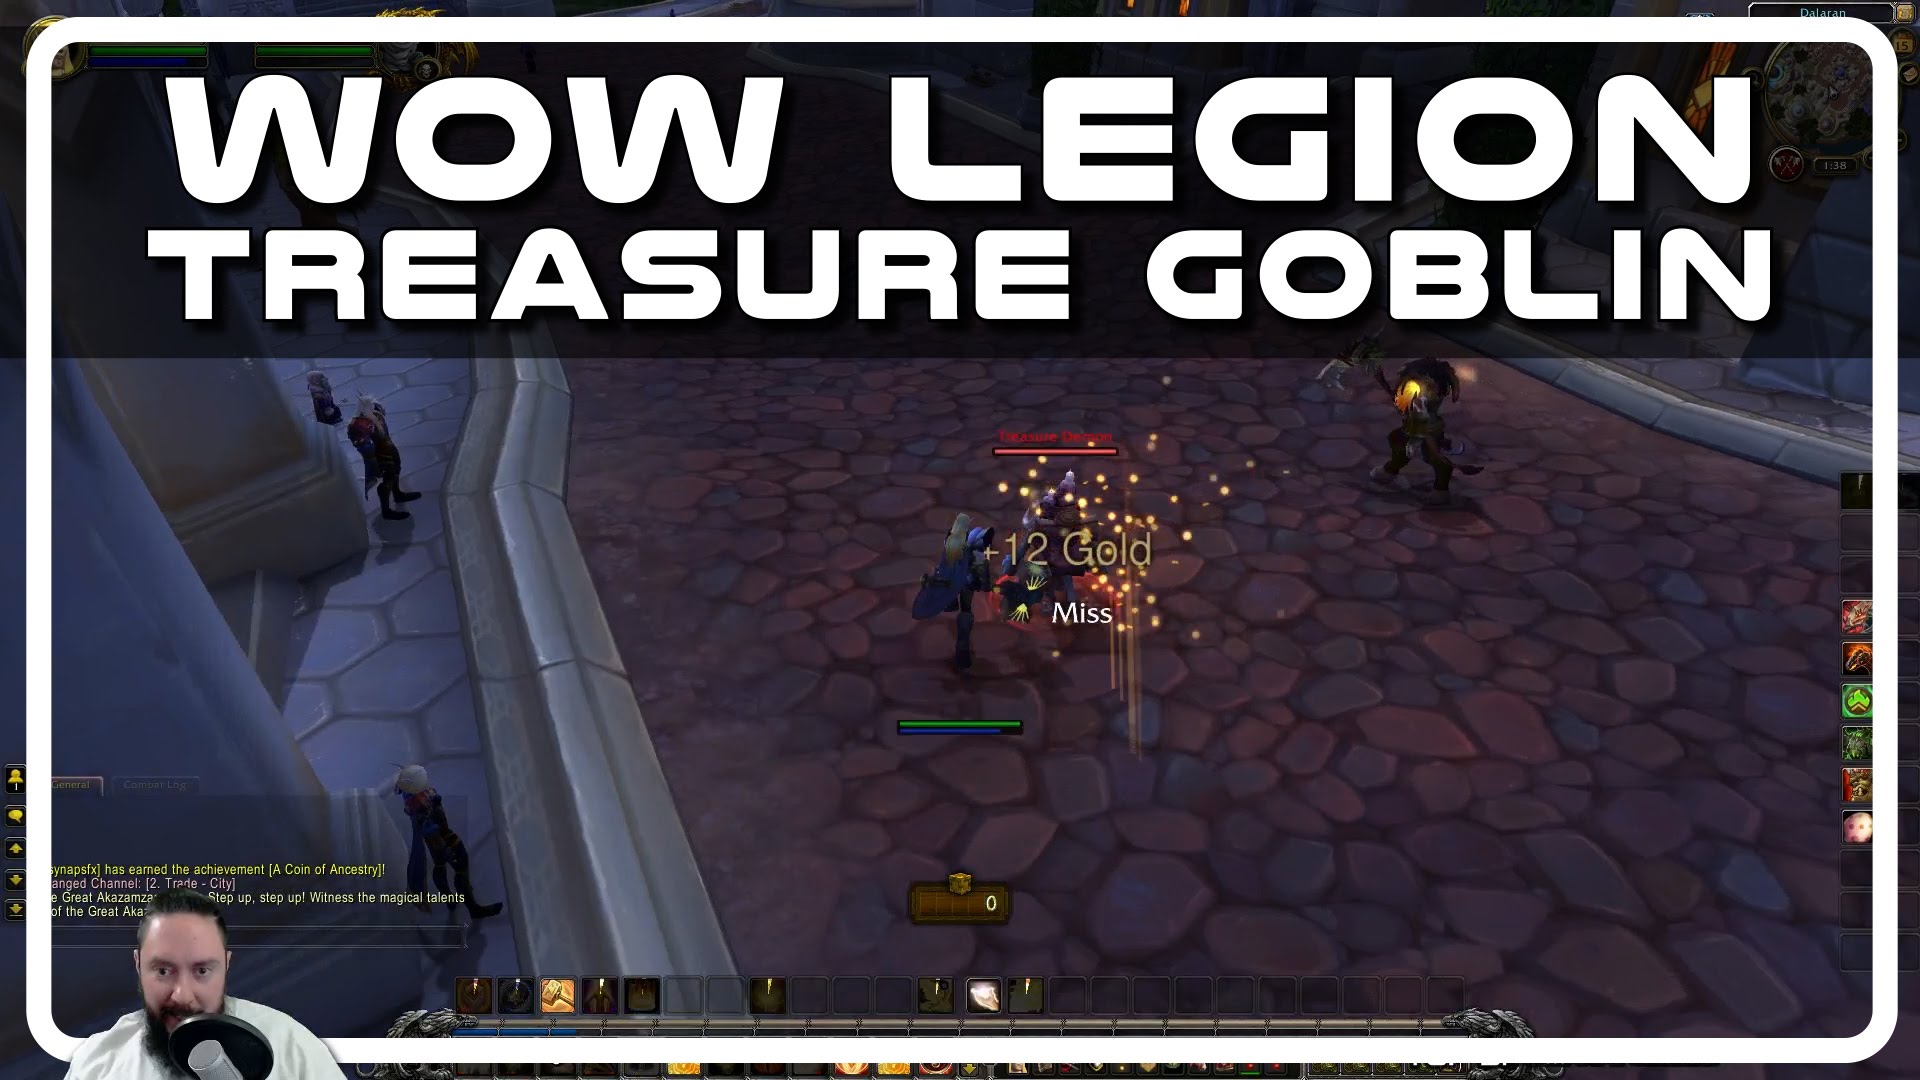 Legion treasure goblins